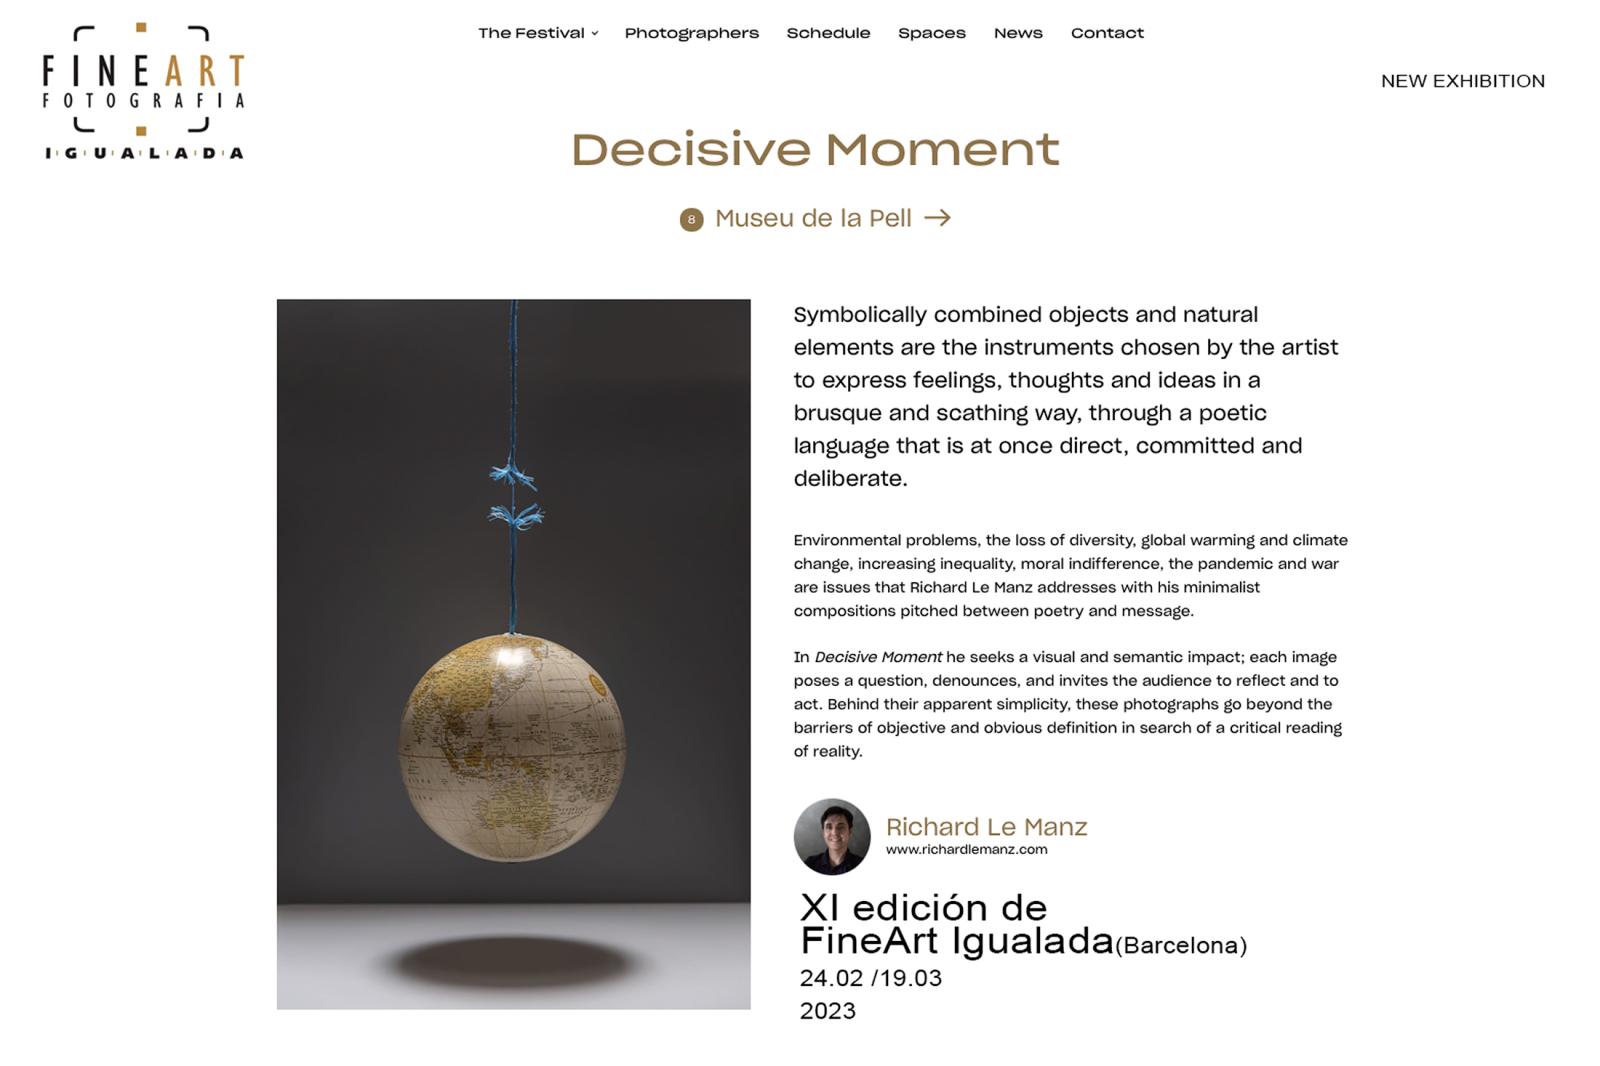 "Decisive Moment" exhibit at Fine Art Igualada (Barcelona)